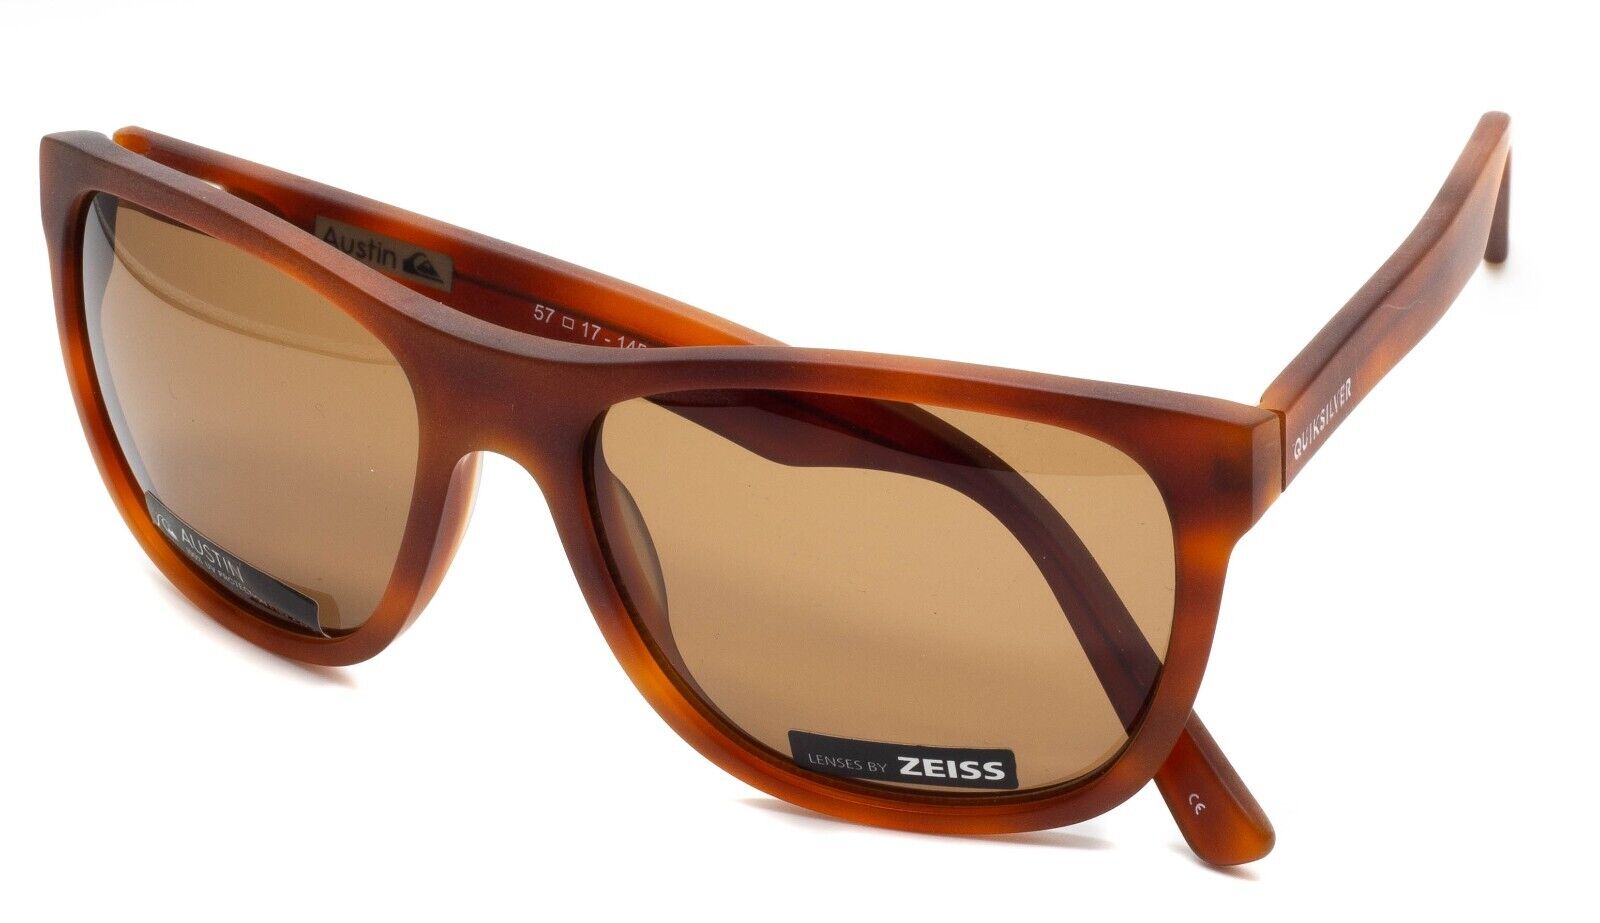 QUIKSILVER AUSTIN EQYEY03078/XCCN UV 57mm Sunglasses Shades